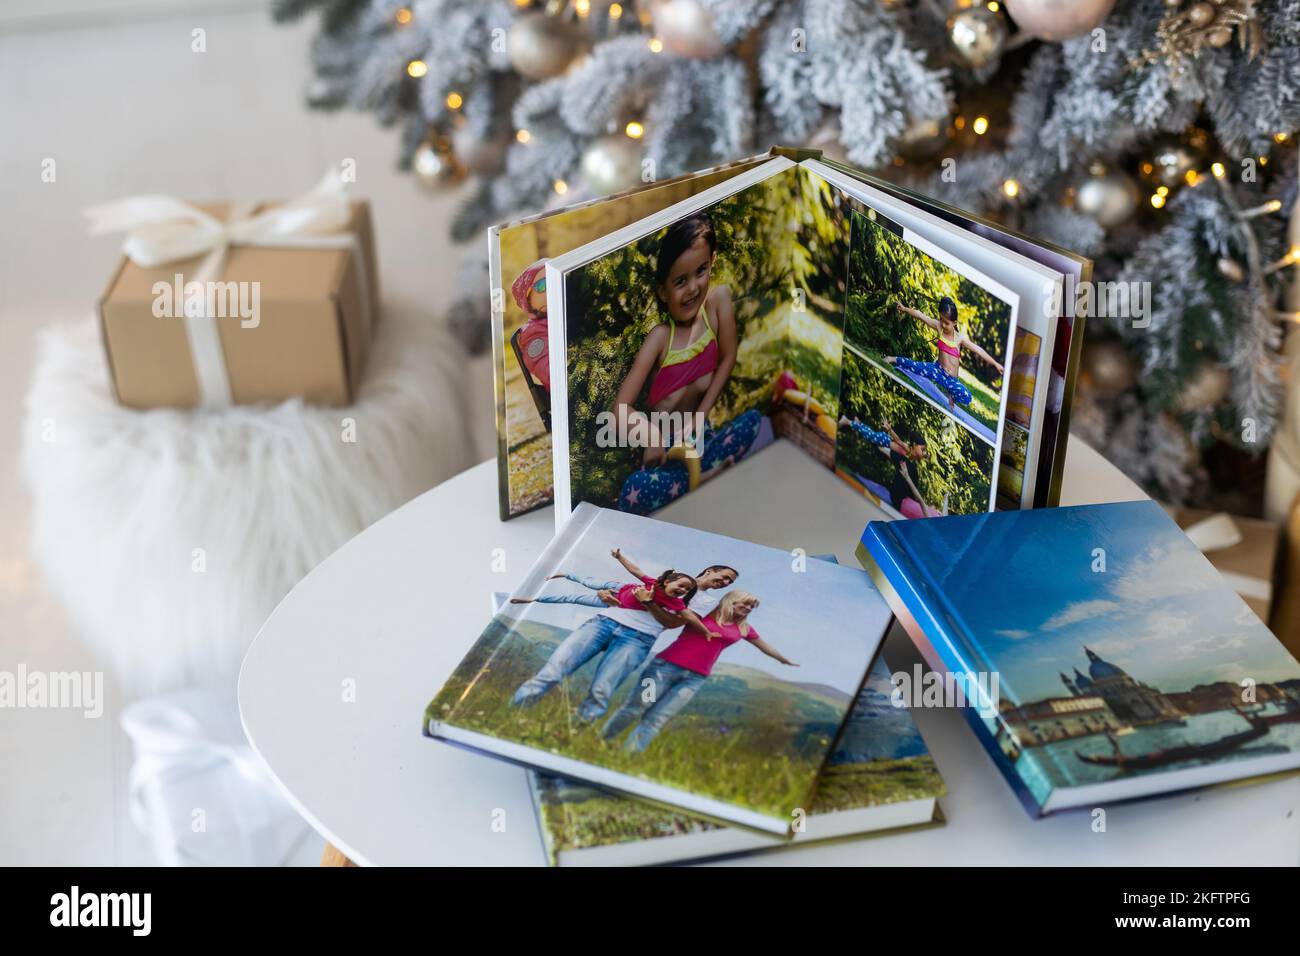 a photo album near the Christmas tree as a gift Stock Photo